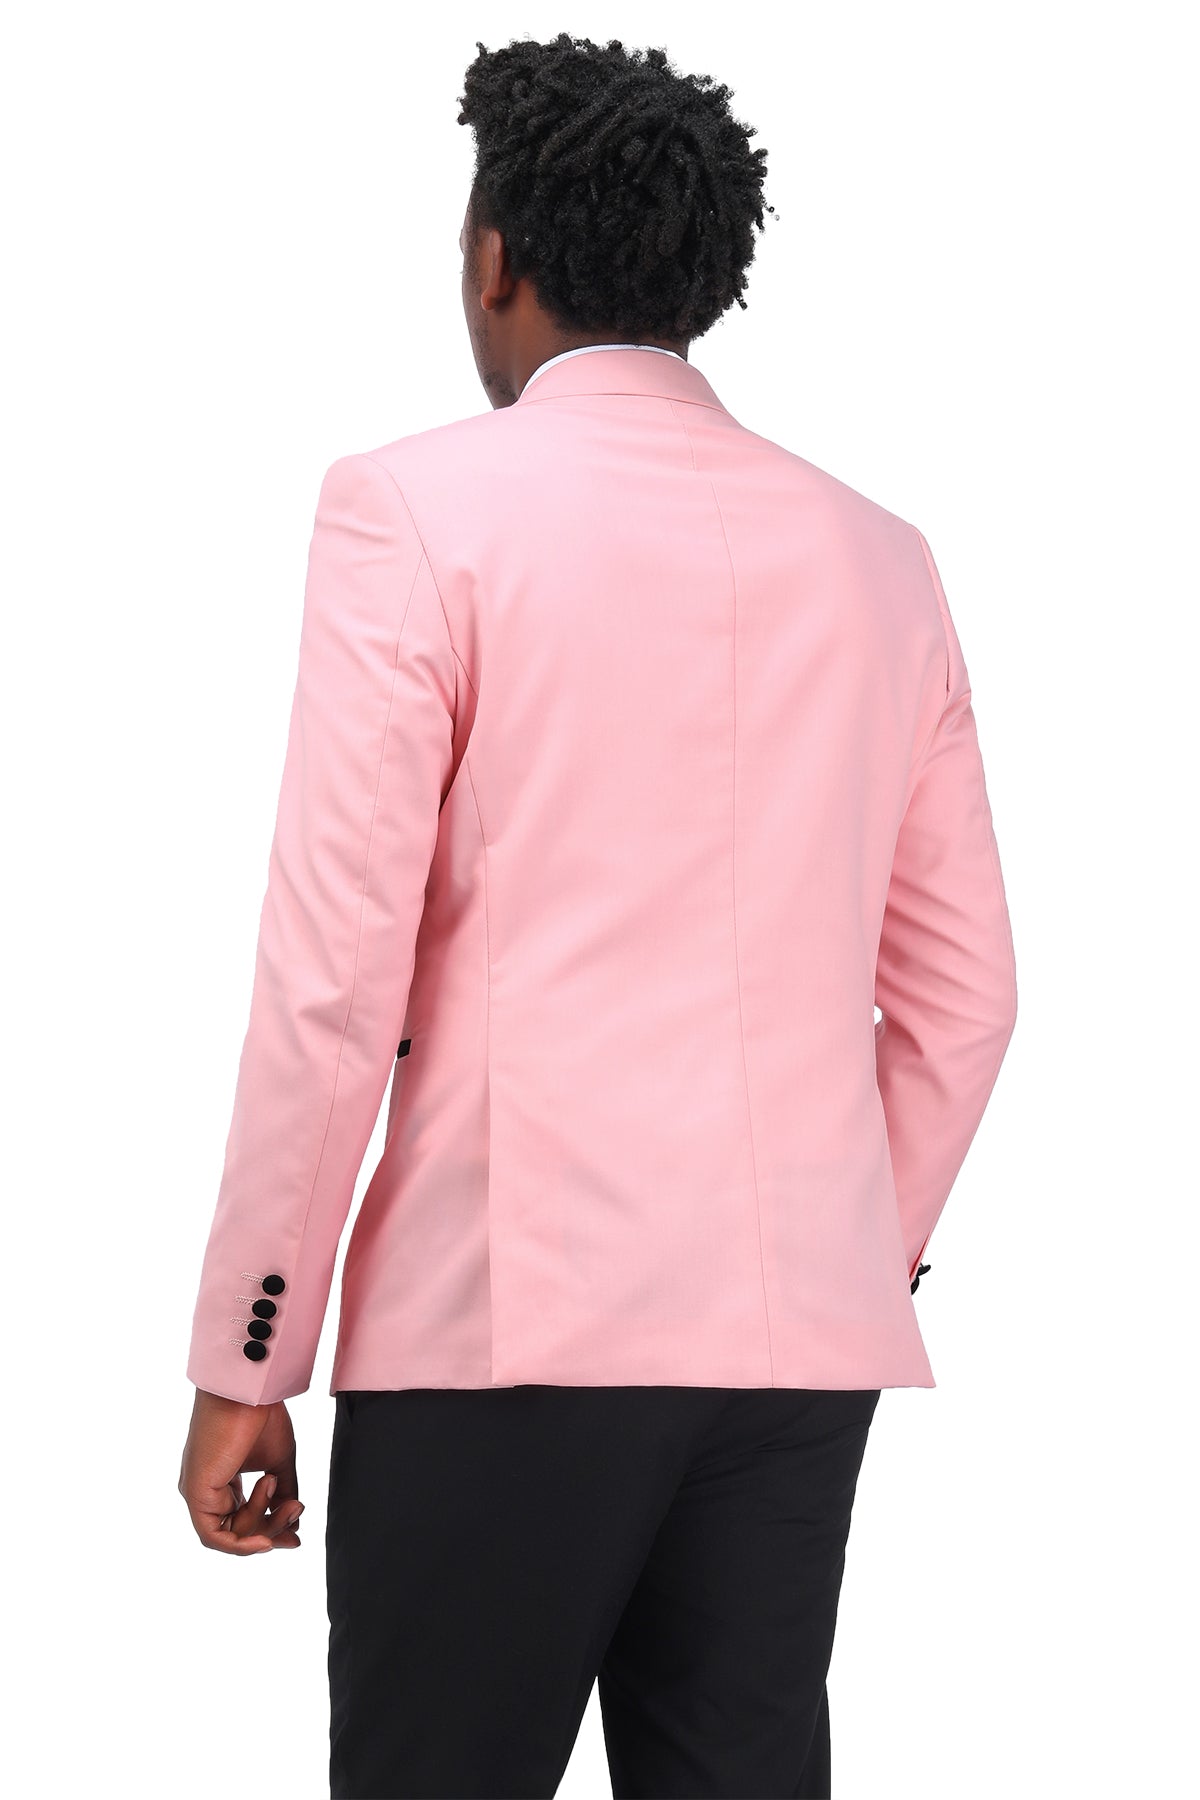 3 Piece Men's Suits One Button Slim Fit Peaked Lapel Tuxedo Pink